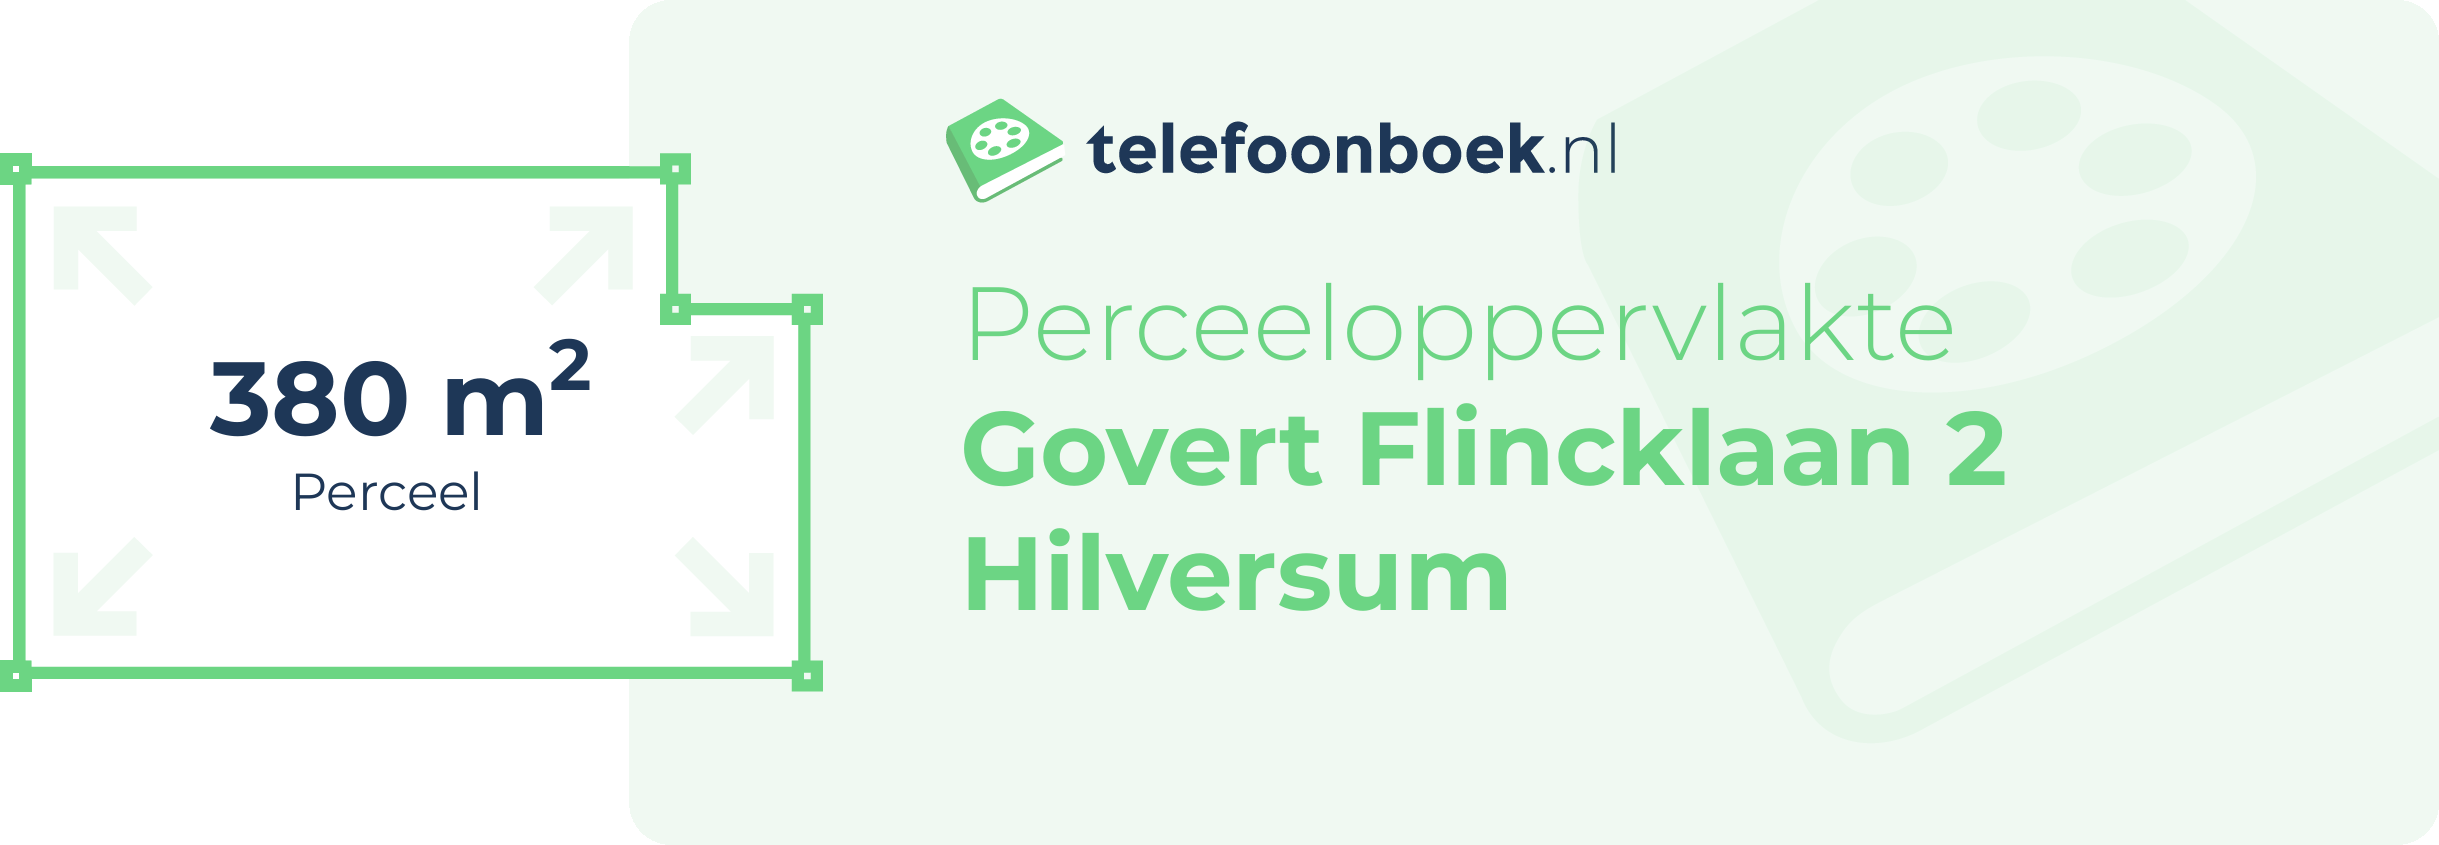 Perceeloppervlakte Govert Flincklaan 2 Hilversum